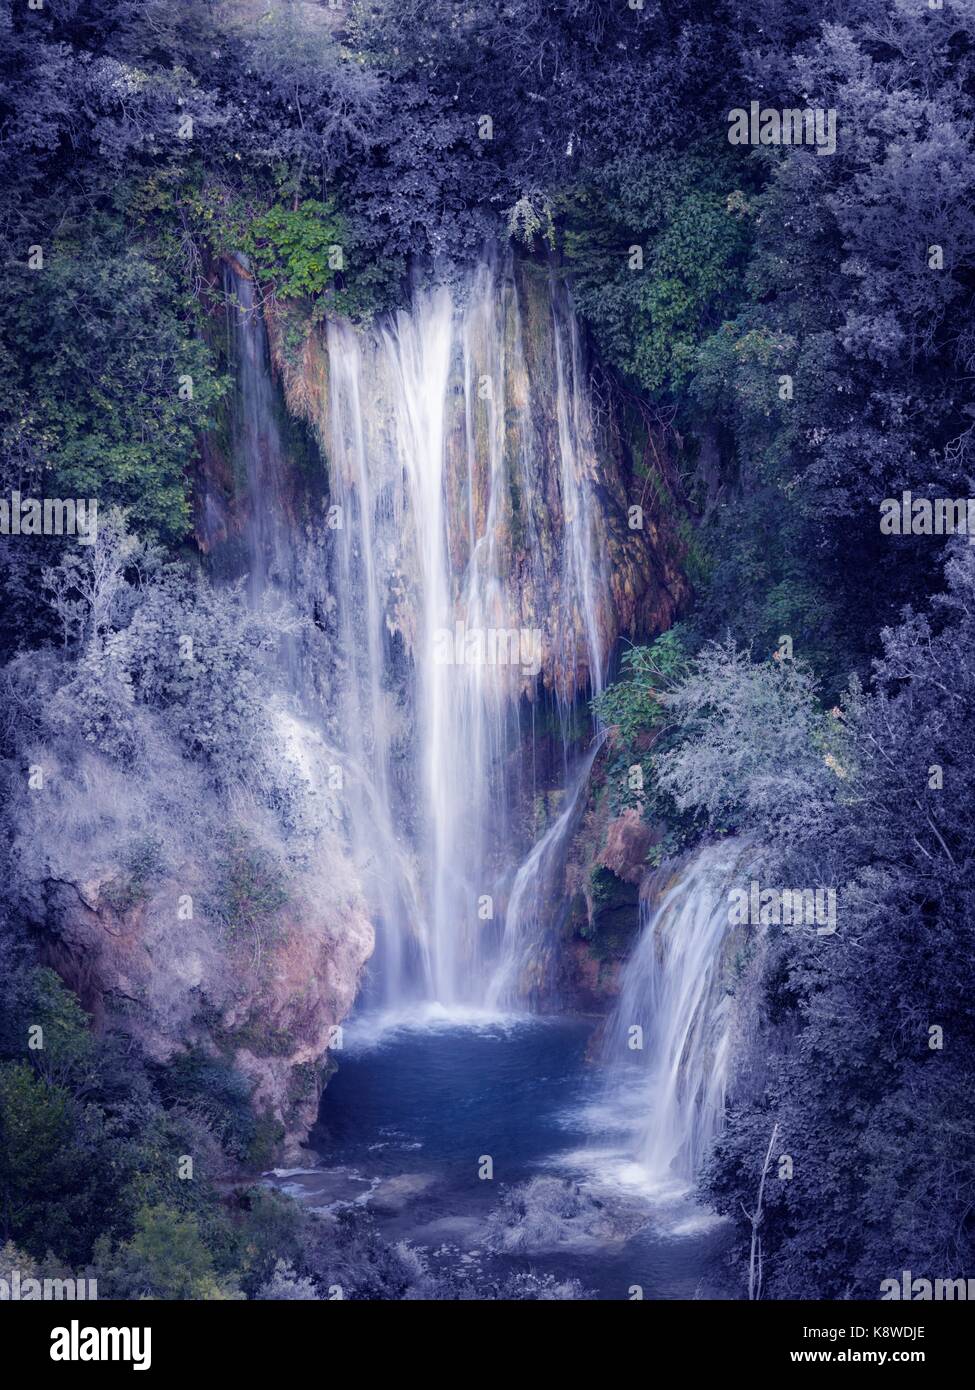 Manojlovac waterfall area in Croatia creative arty artistic manipulated color Stock Photo